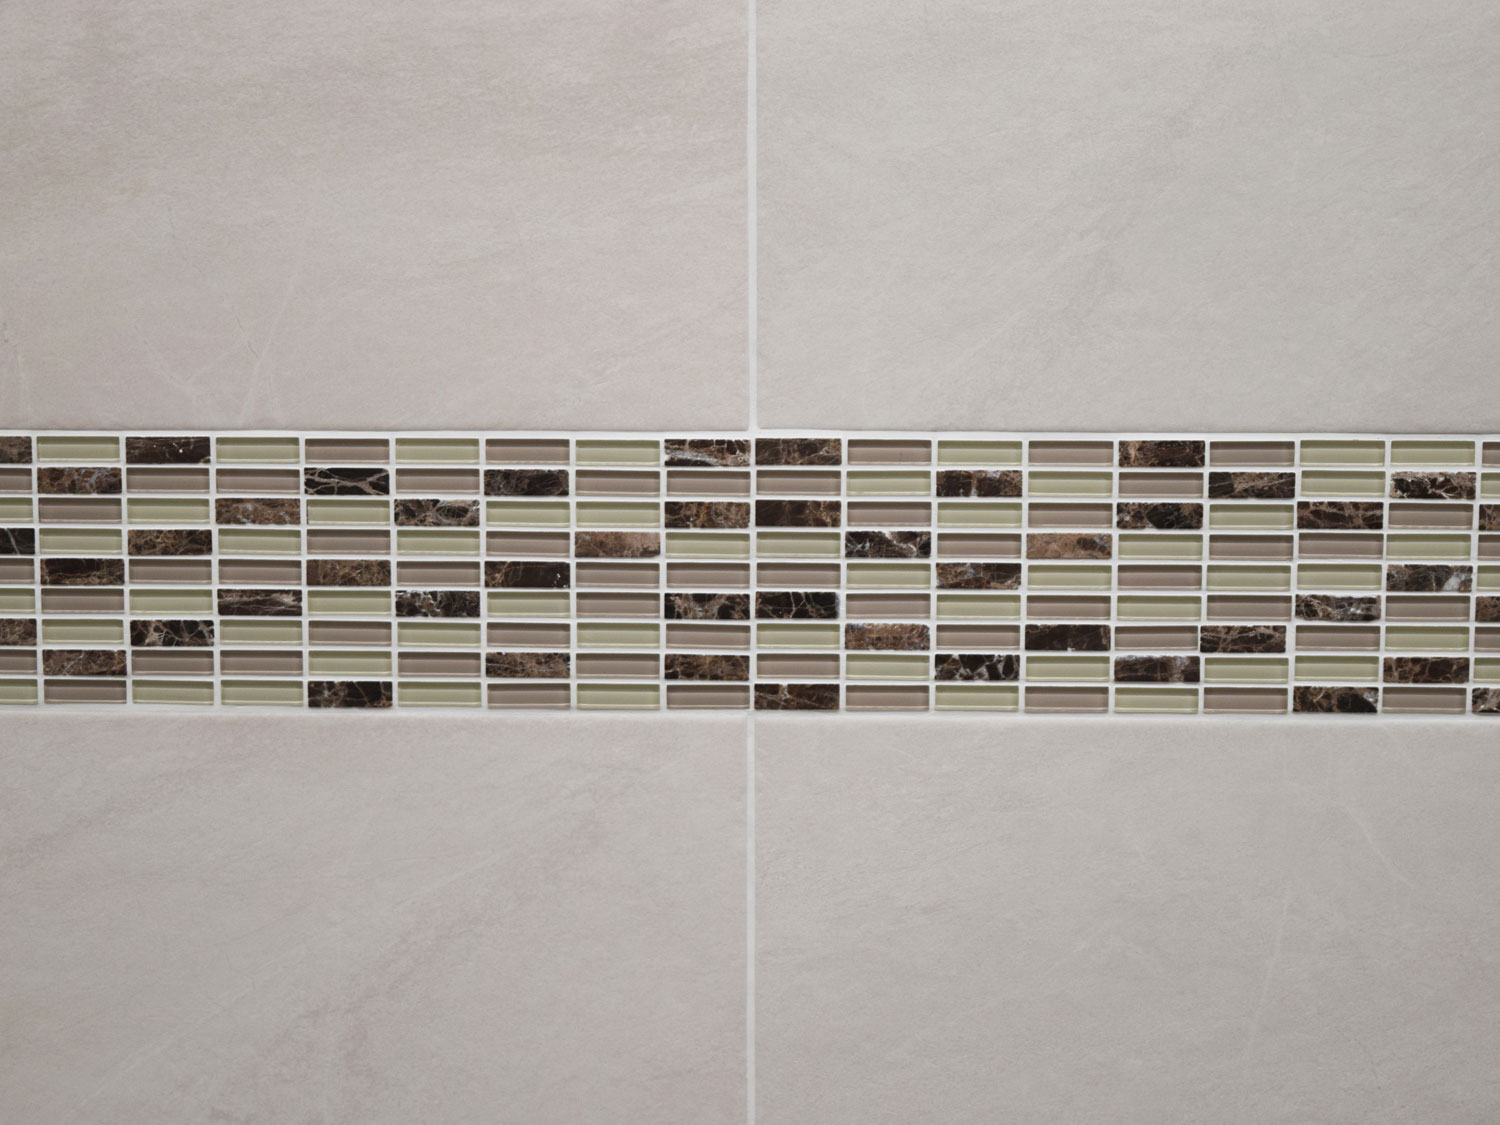 Ayton White Ceramic Wall Tile